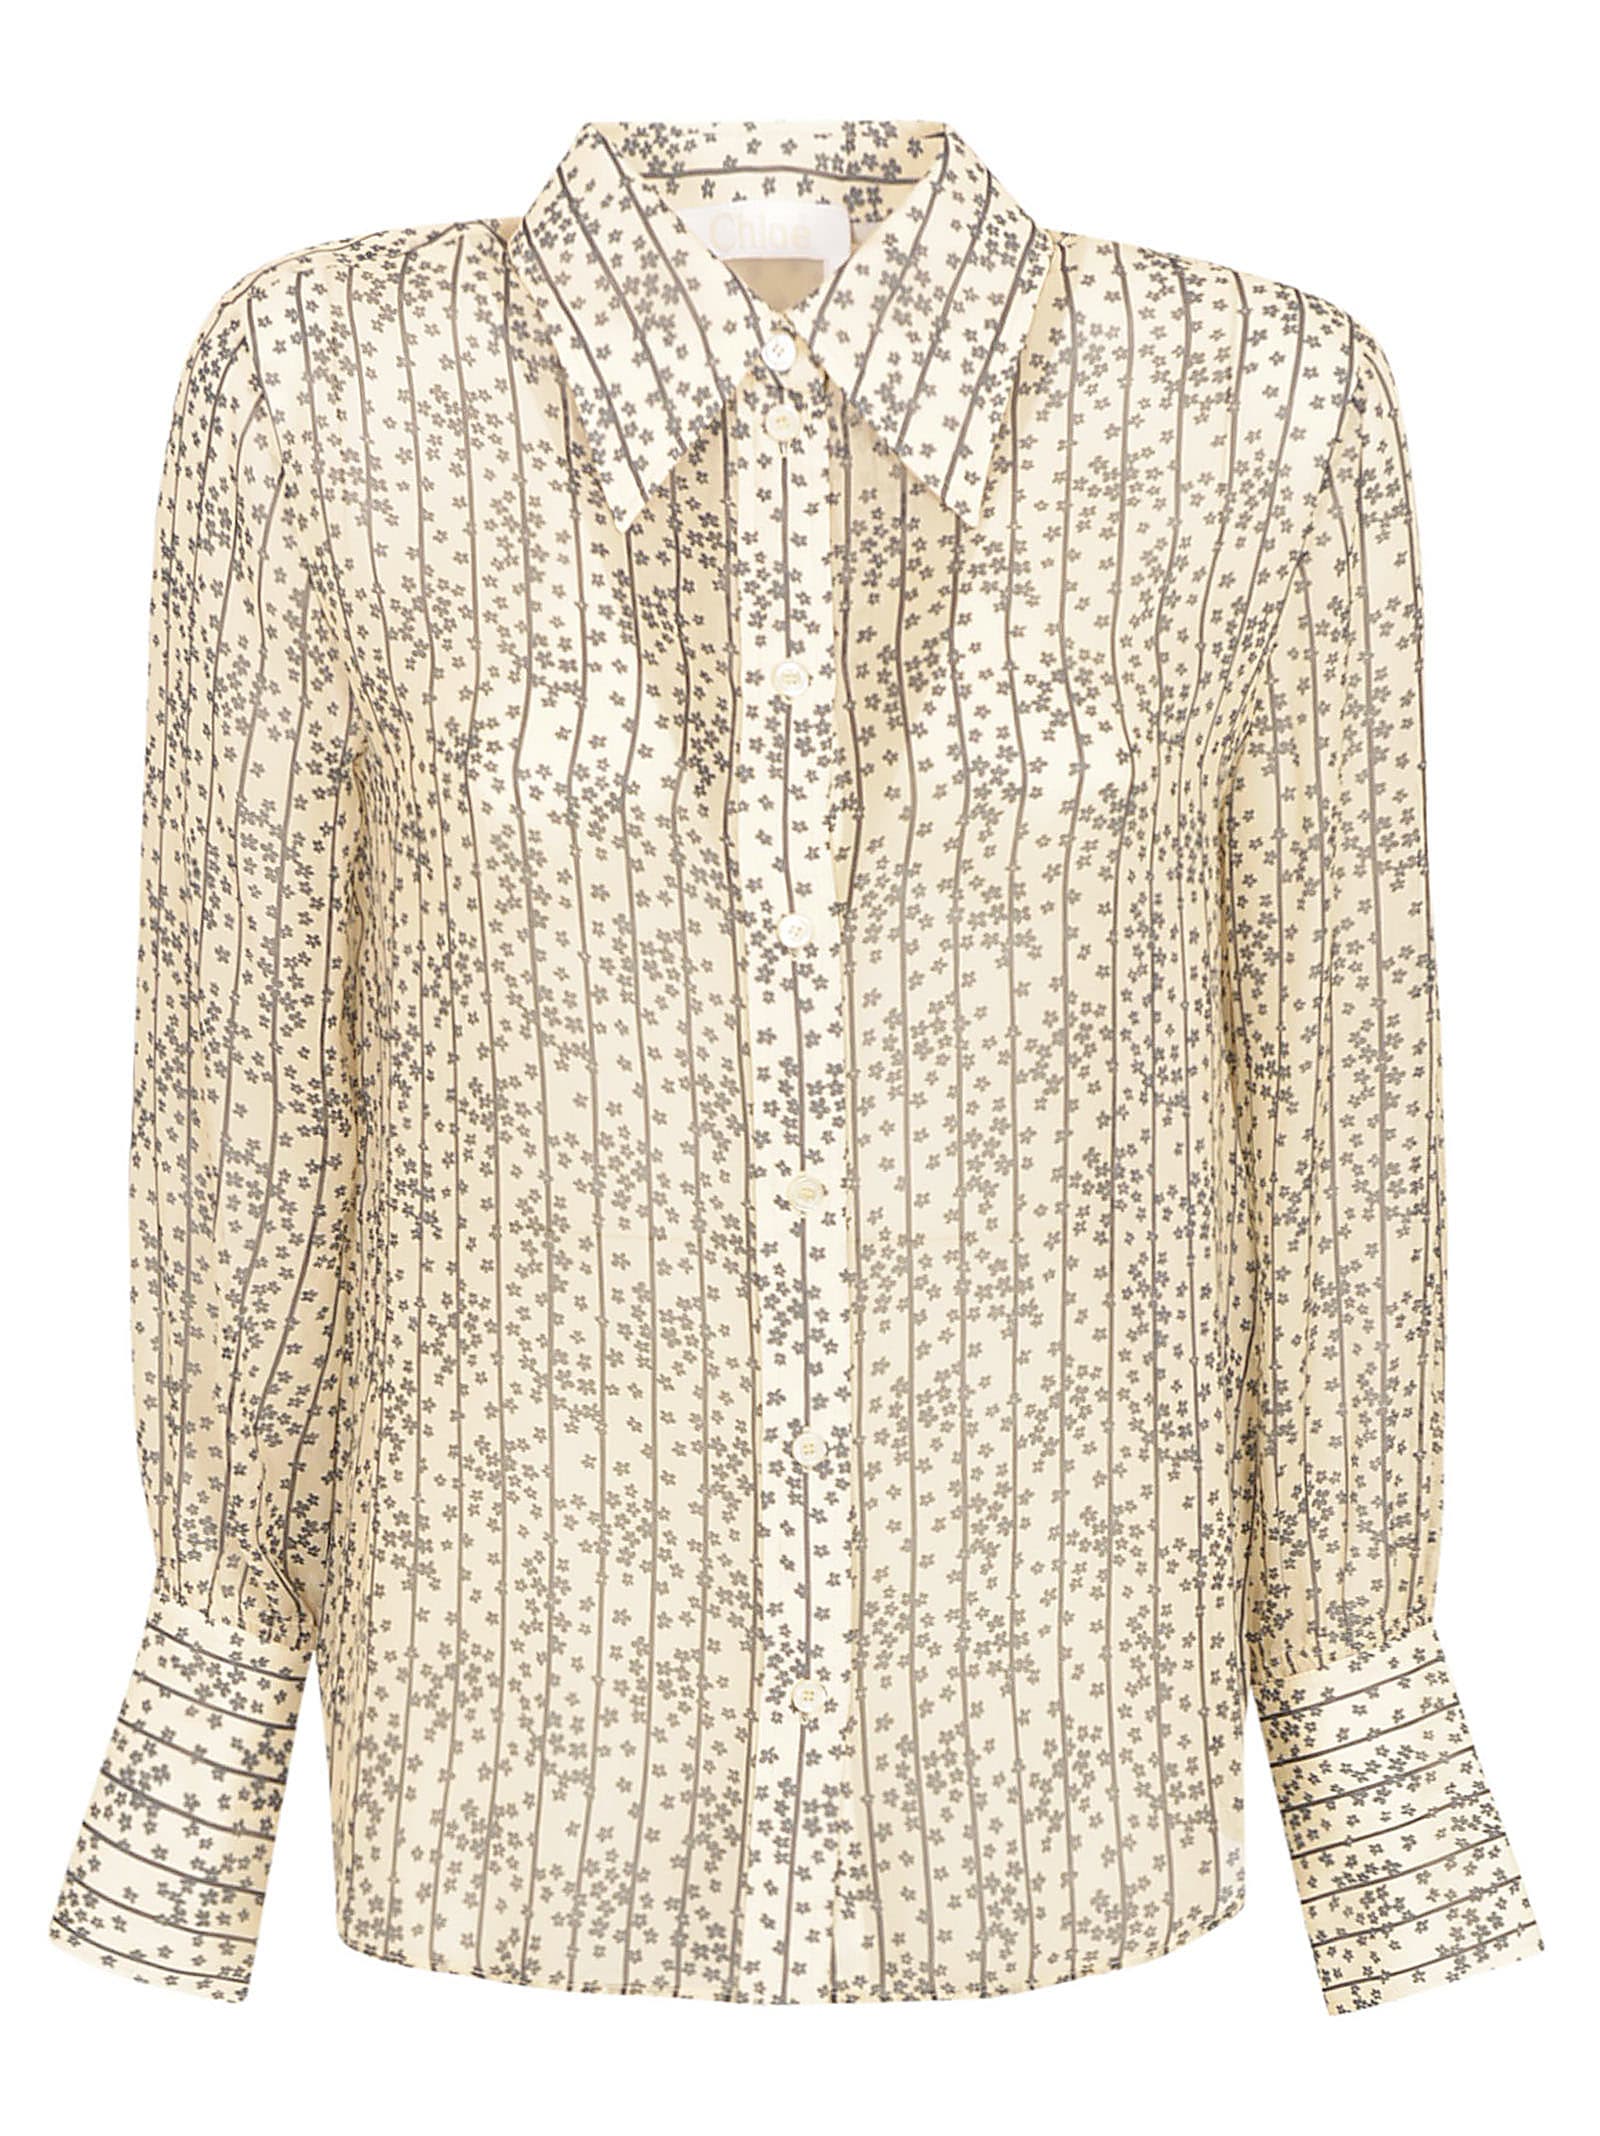 Chloé Floral Print Striped Shirt | italist, ALWAYS LIKE A SALE